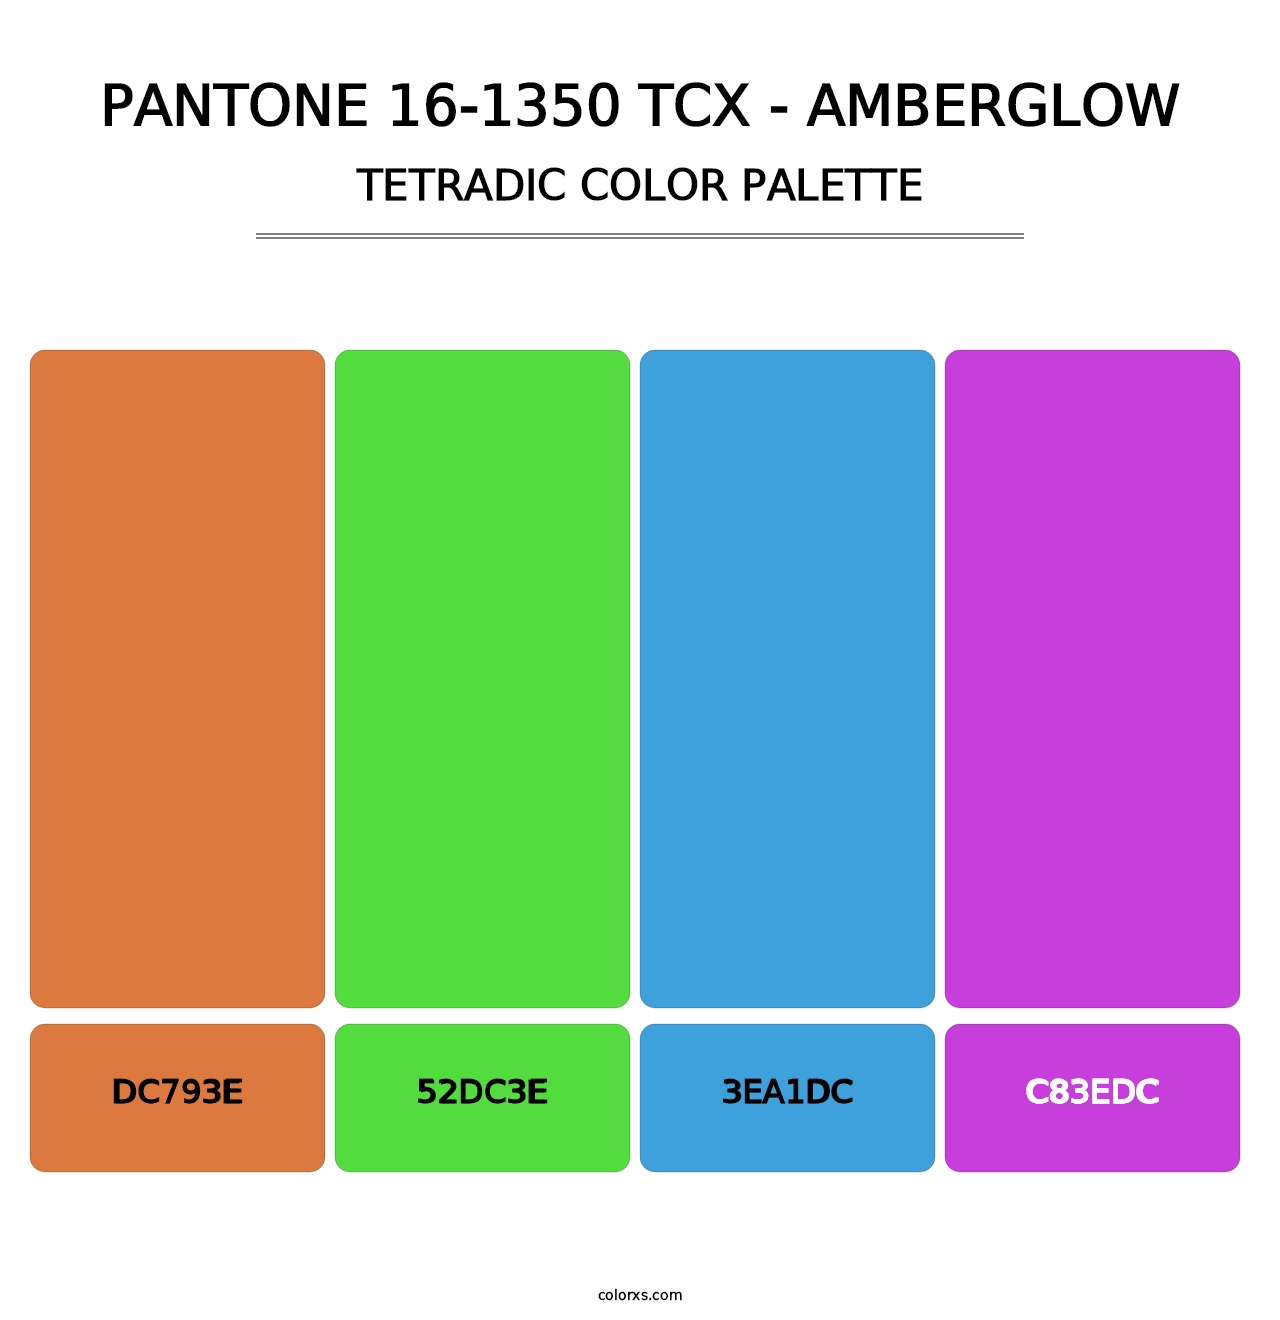 PANTONE 16-1350 TCX - Amberglow - Tetradic Color Palette